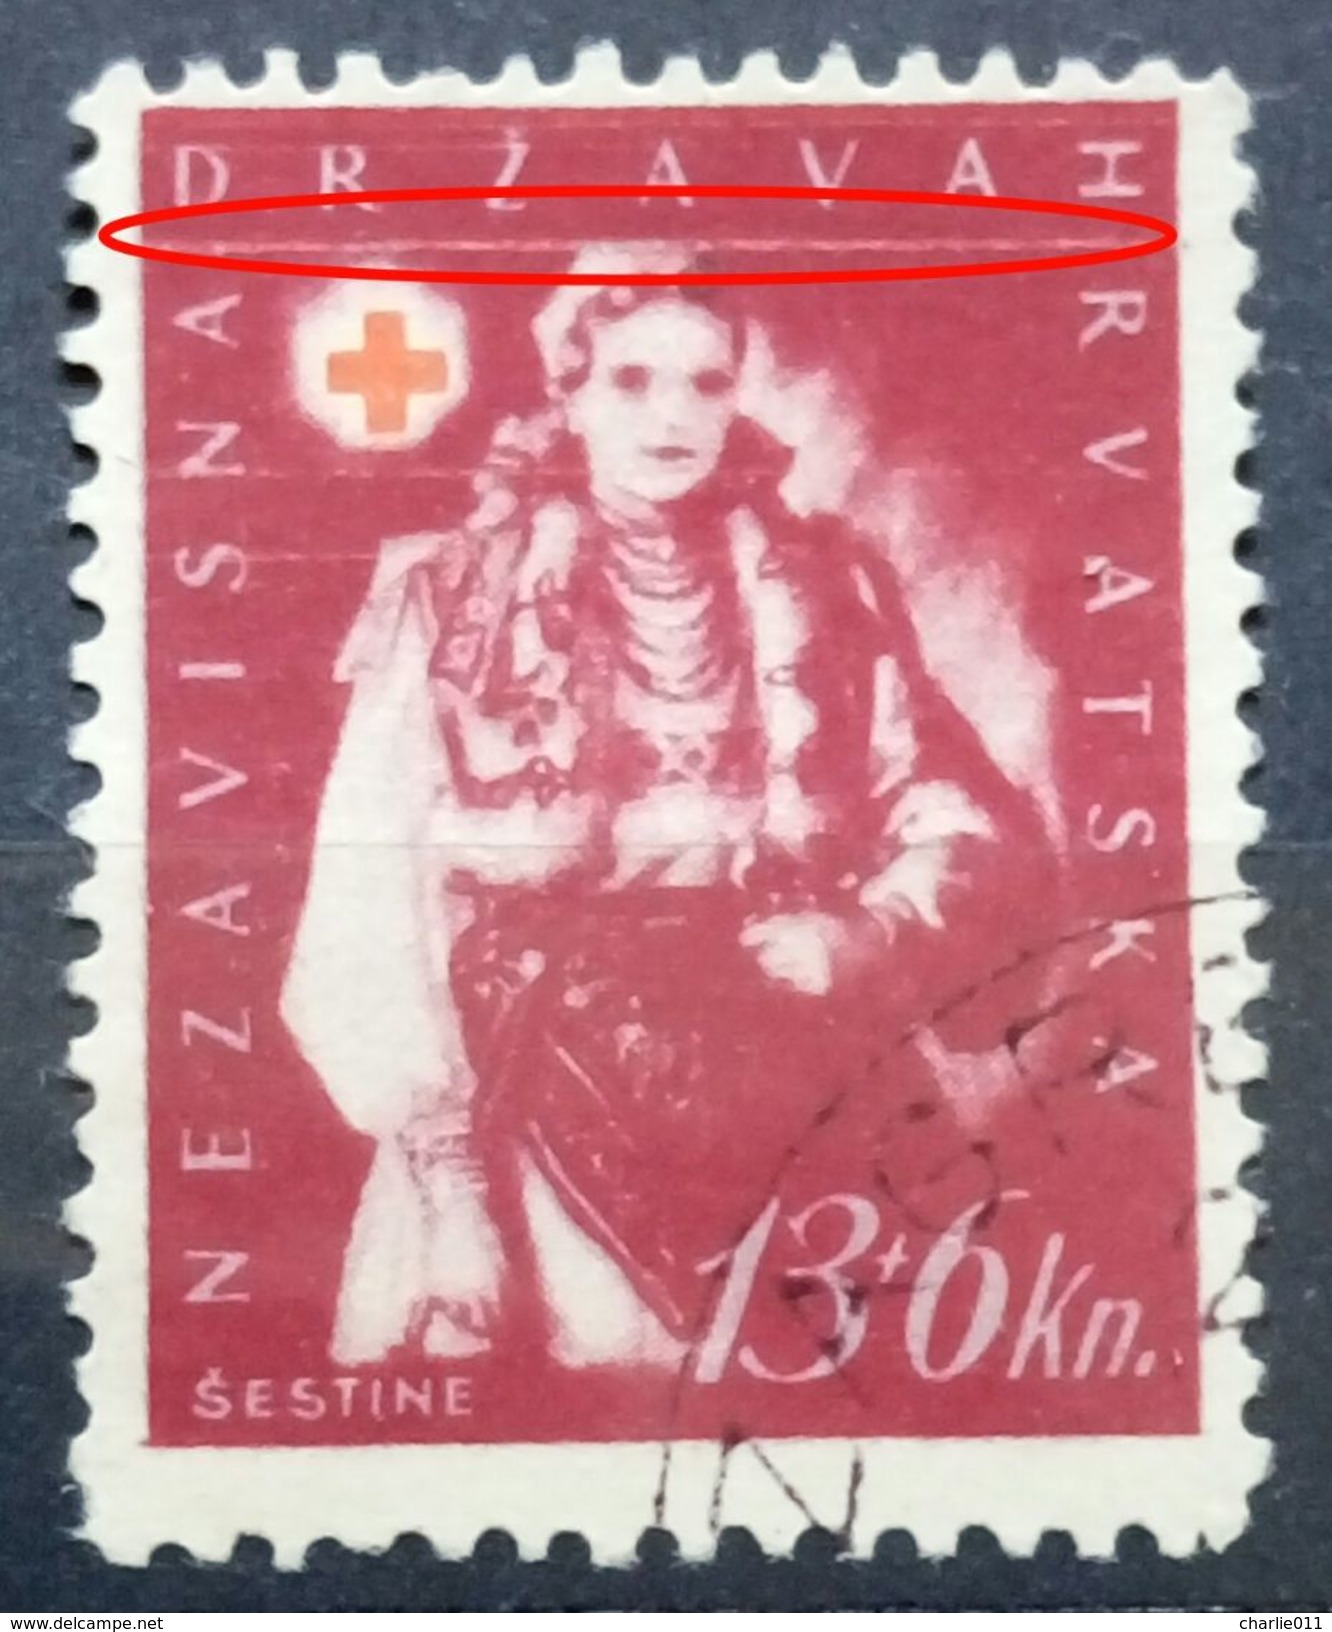 RED CROSS-13+6 K-NATIONAL COSTUMES-ŠESTINE-ERROR-LINE-RARE-NDH-CROATIA-1942 - Croatie